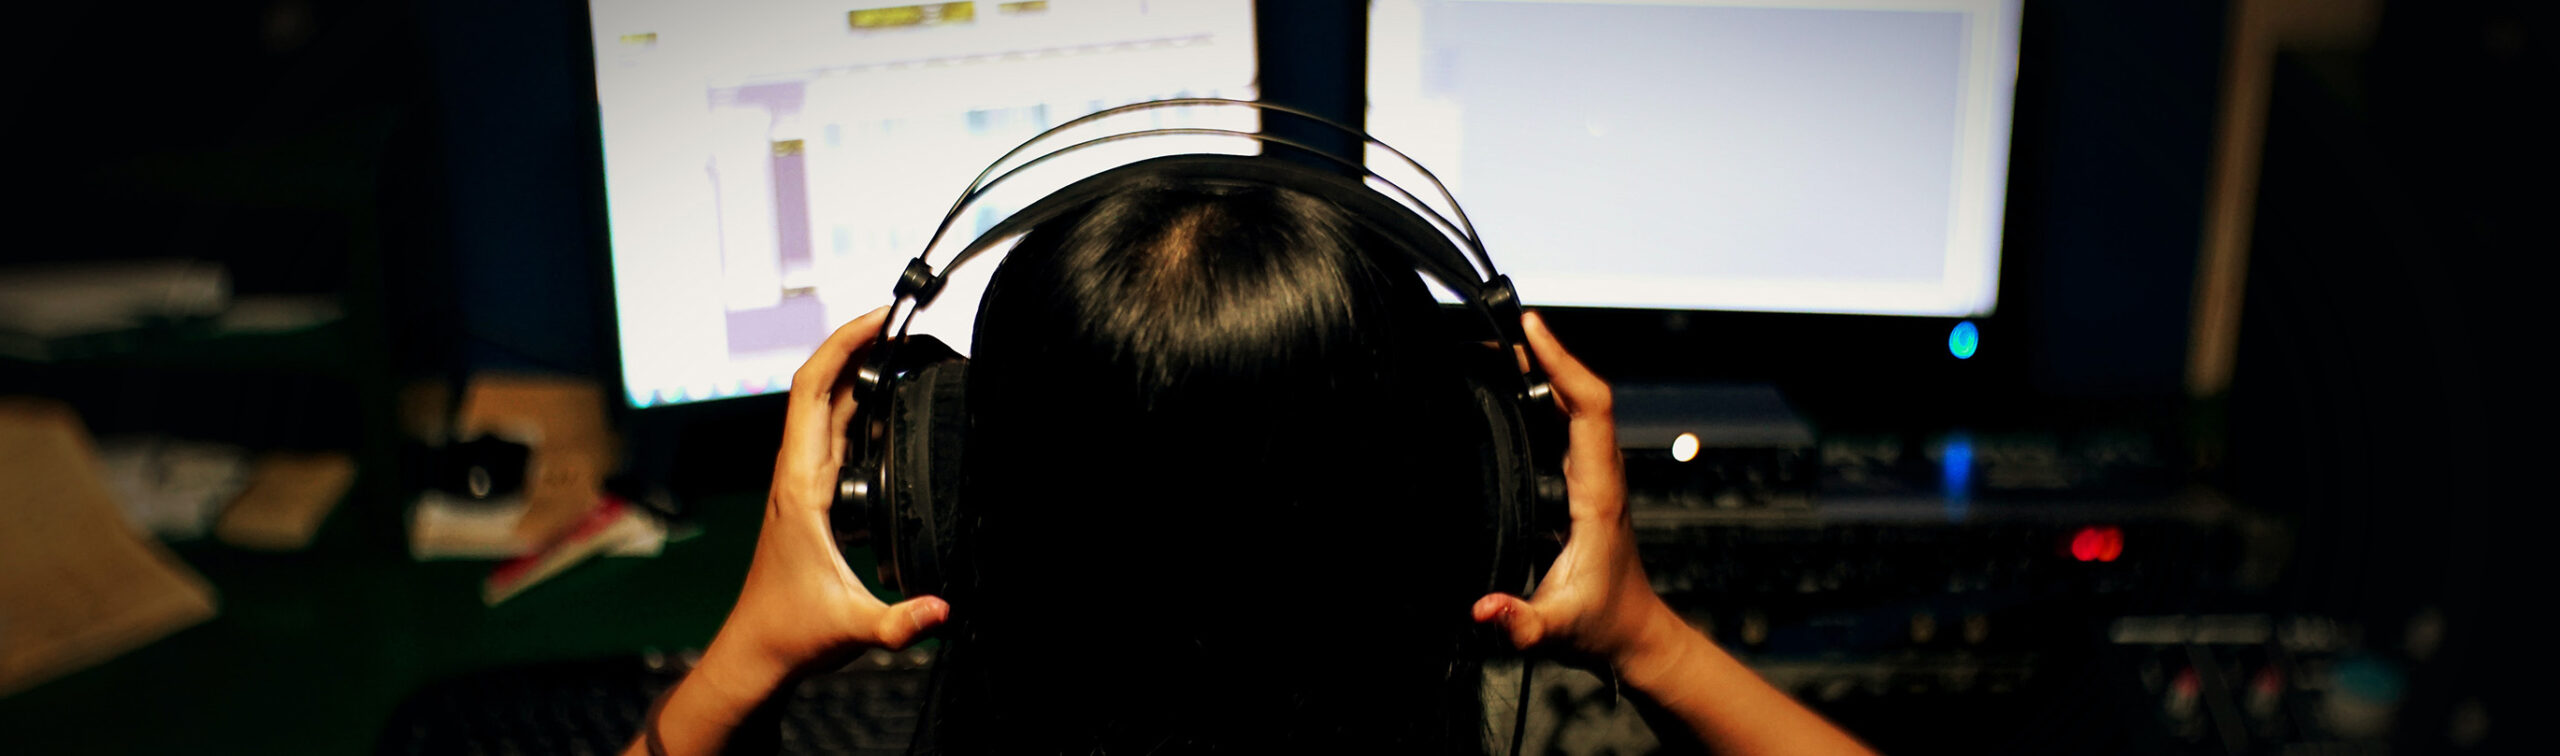 Woman wearing headphones looking at two computer screens